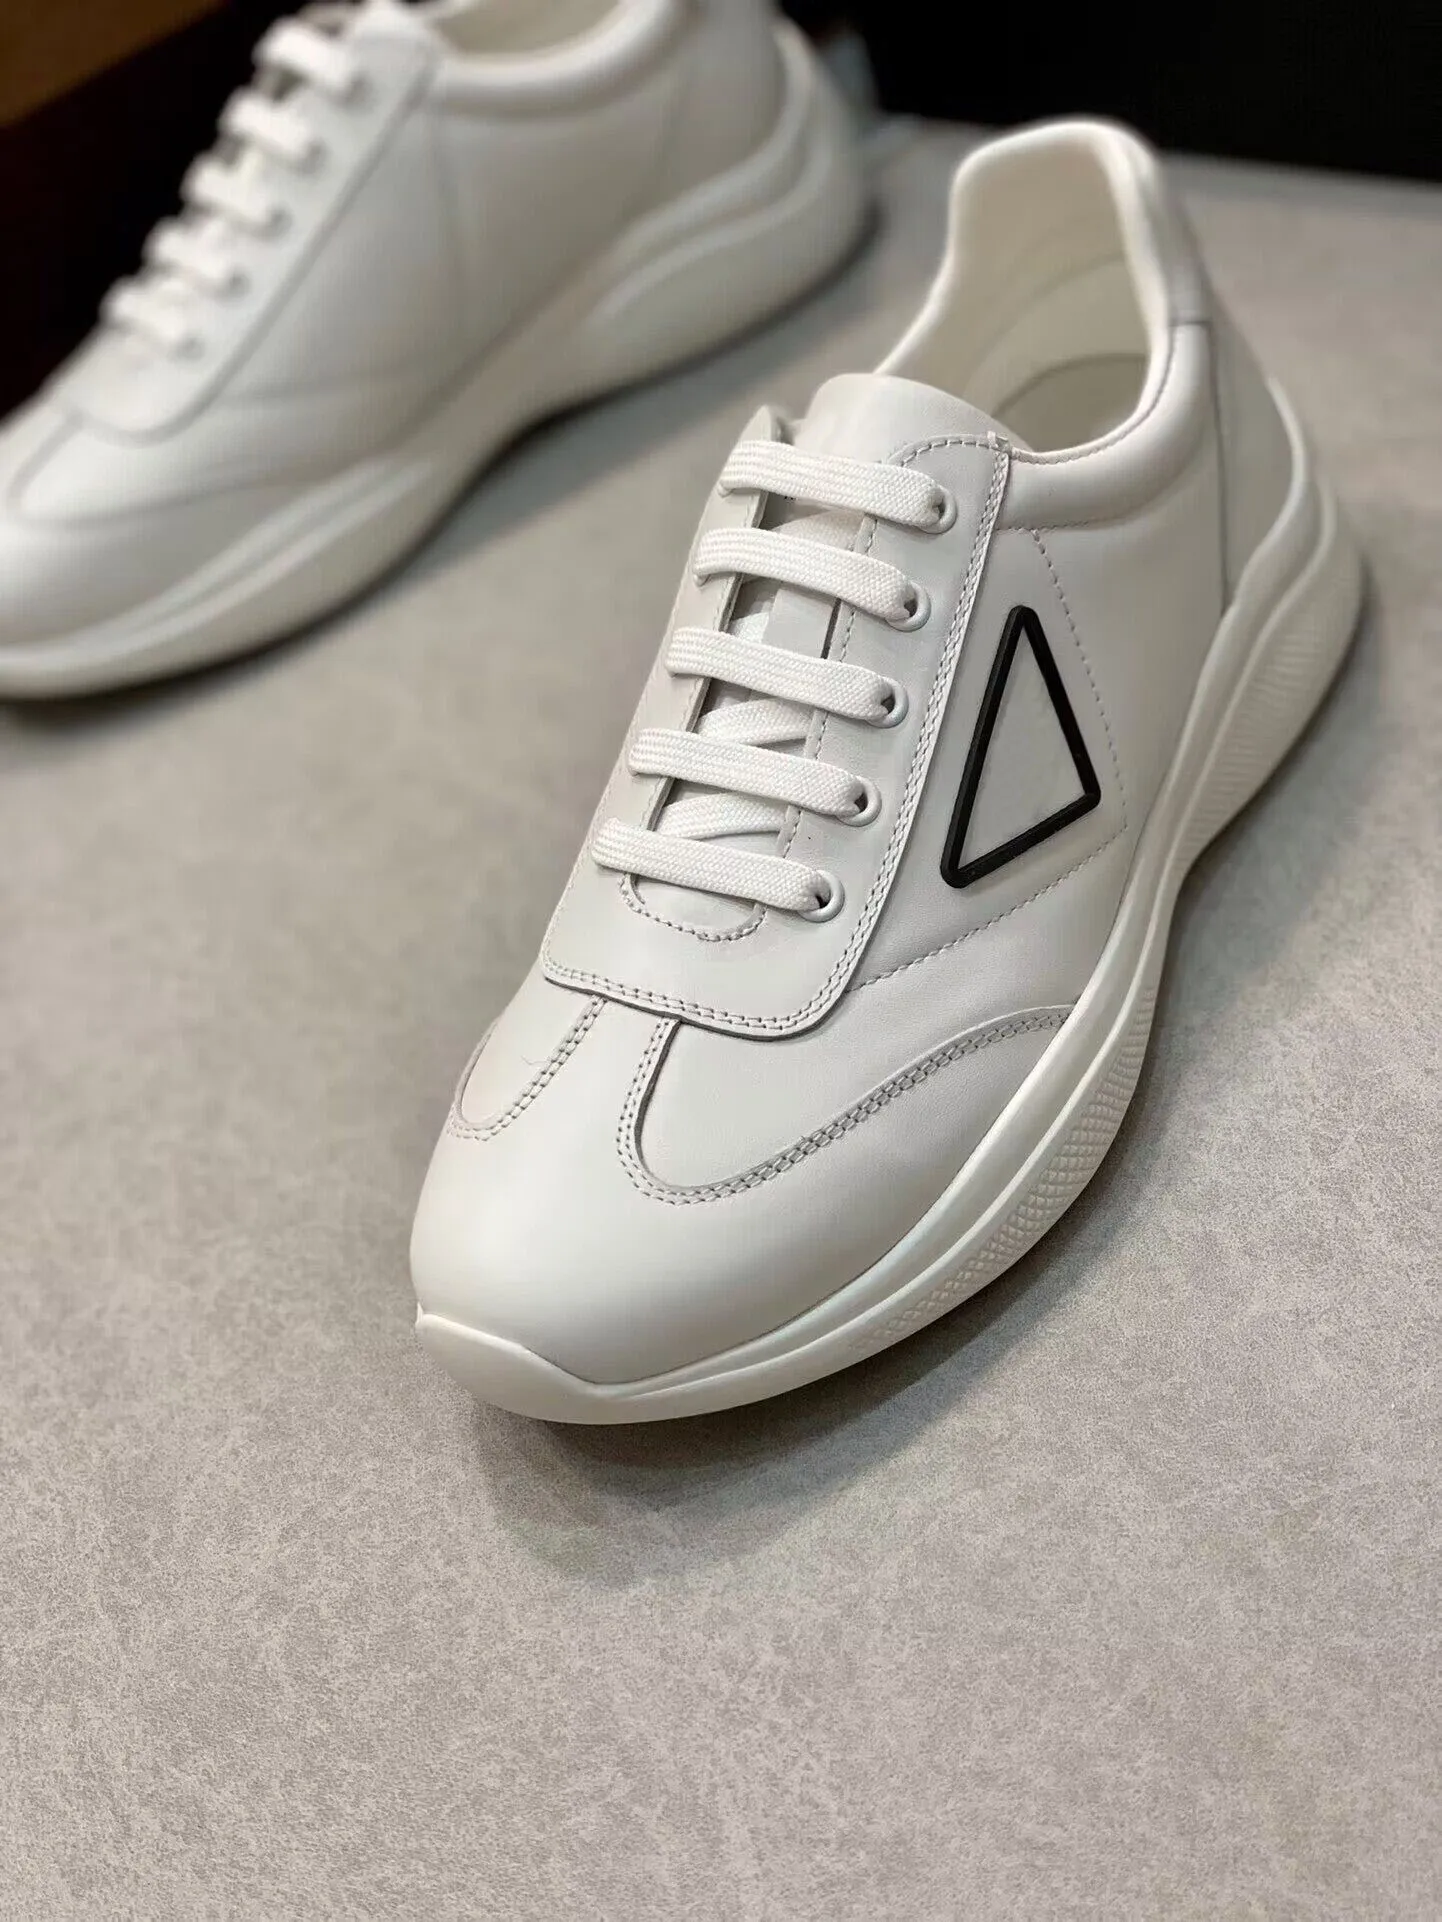 23S America's Cup Triangle Men Casual Shoes White Black Leather Sneaker Summer Pop Designer Shoe Rubber Sole Platform Trainers met doos EU38-45